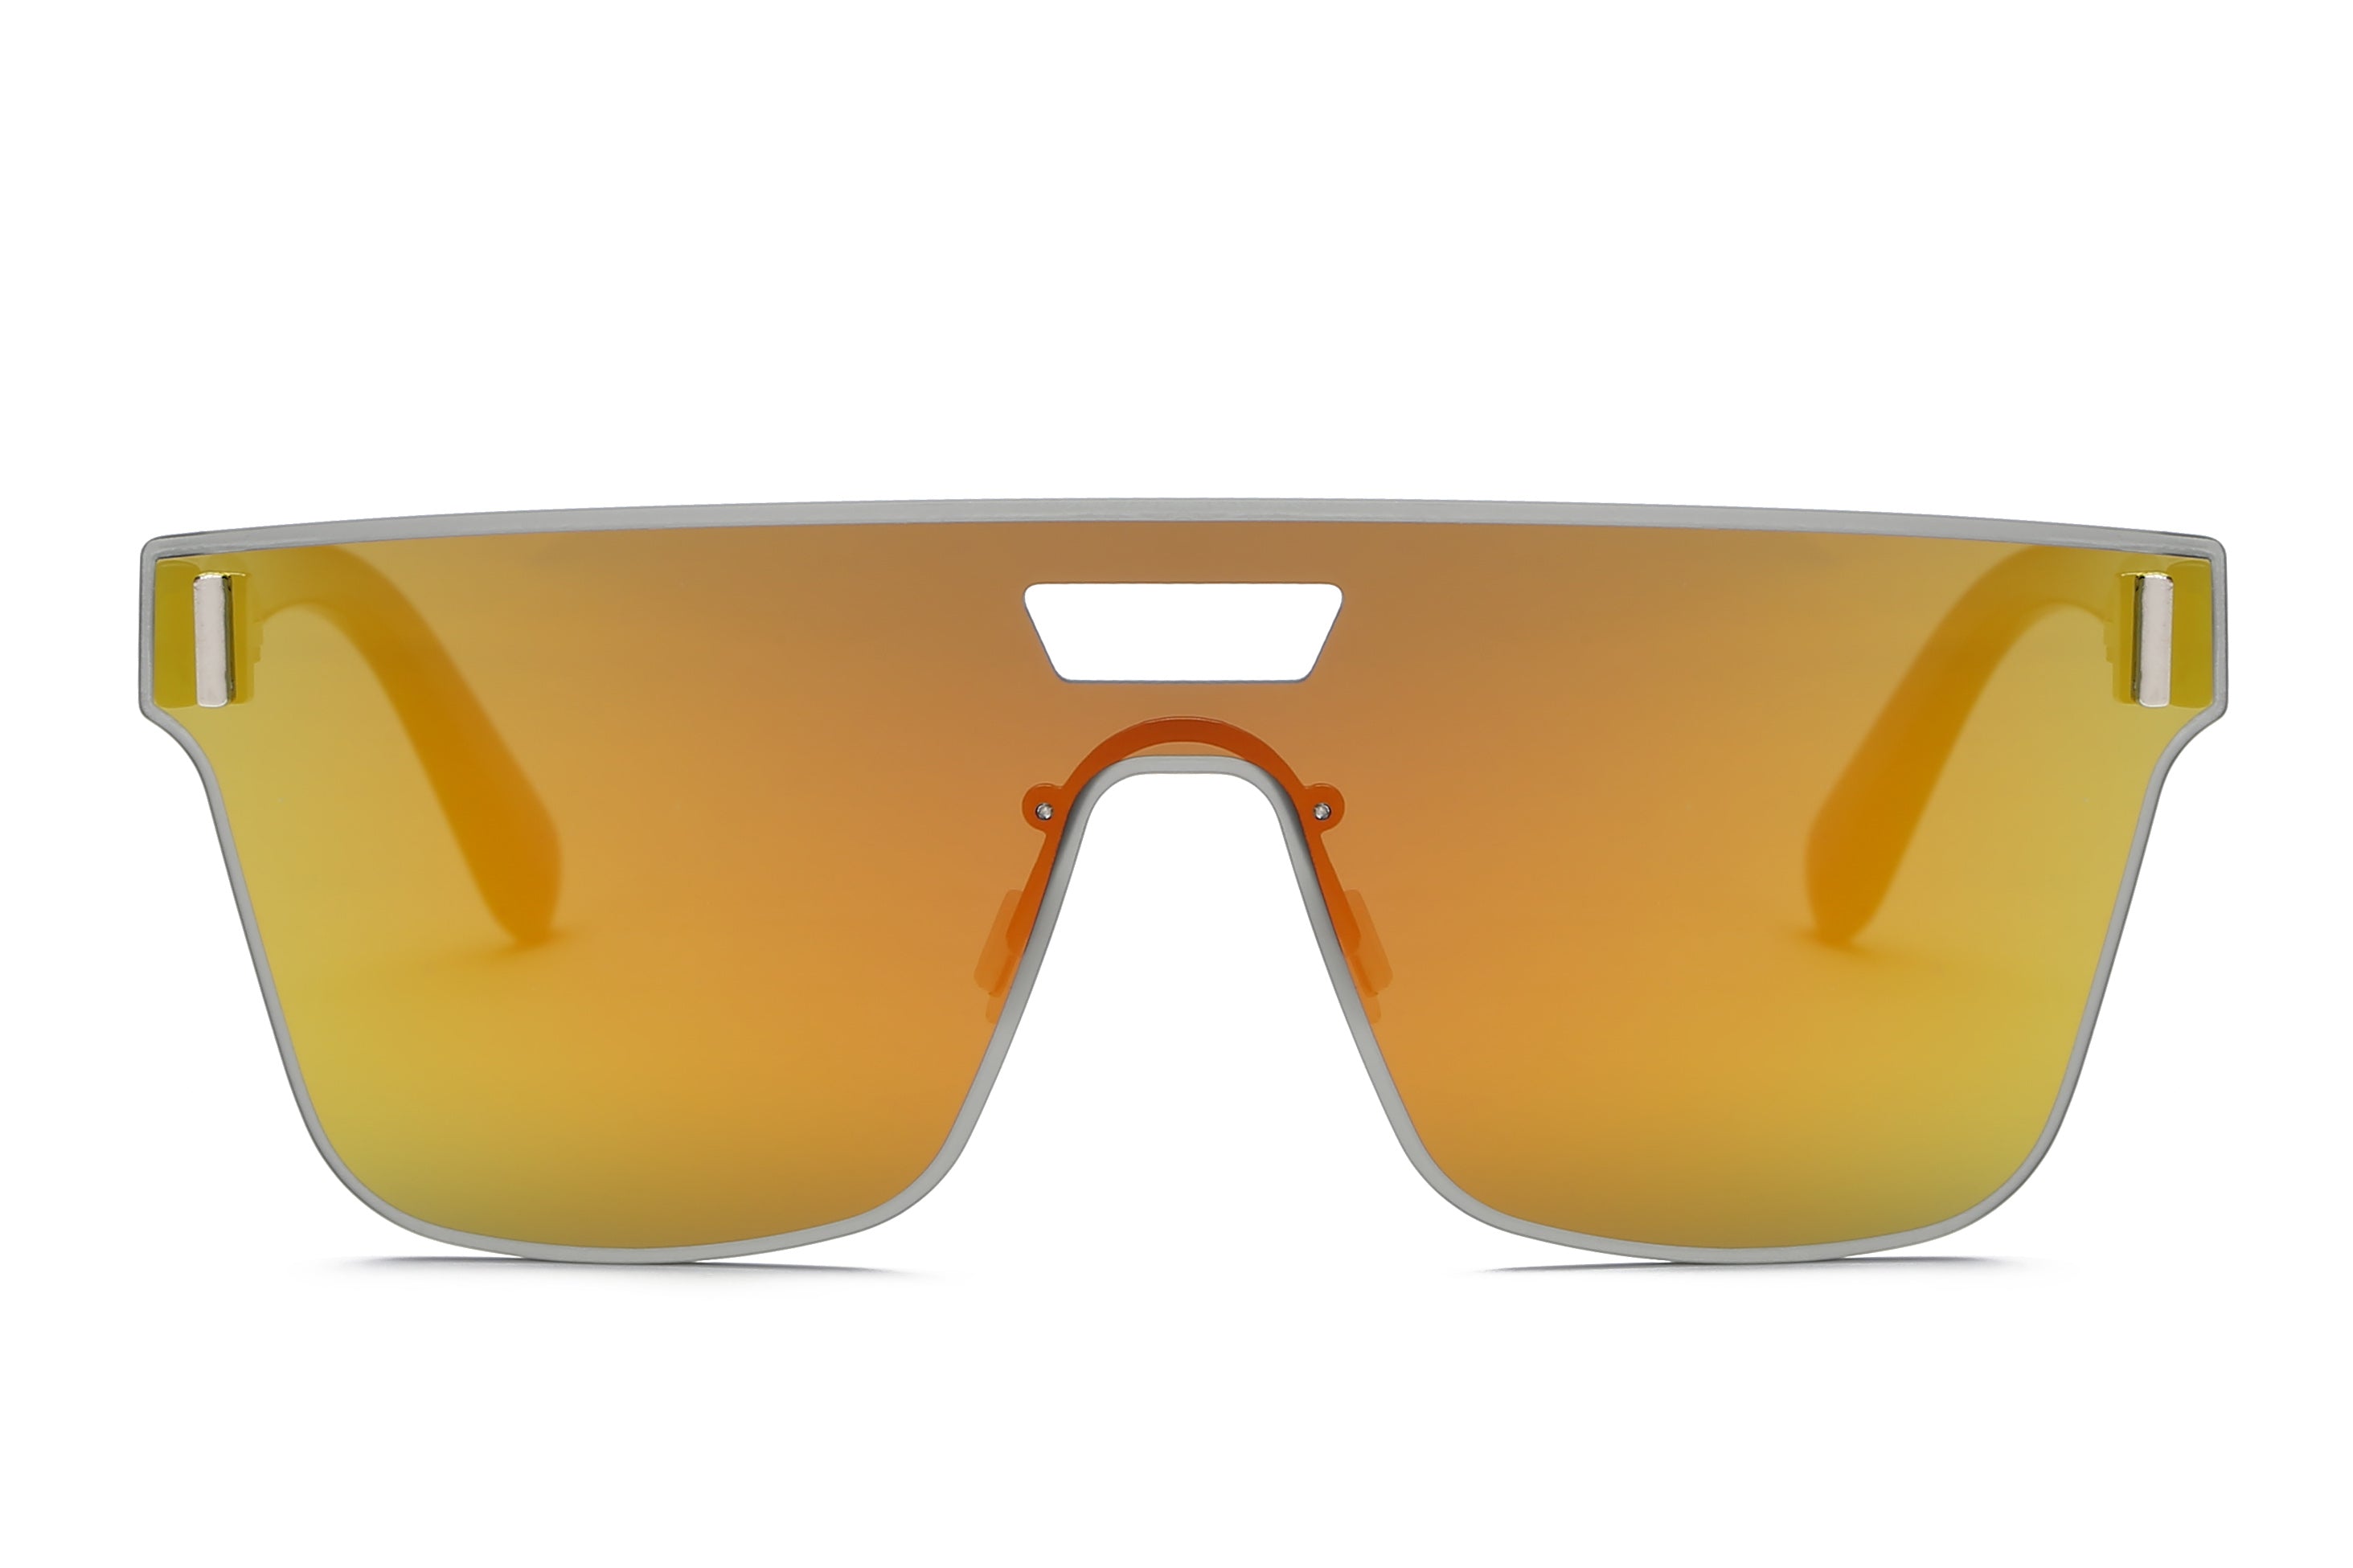 S2075 - Unisex Retro Square Mirrored Sunglasses Assorted/Mixed